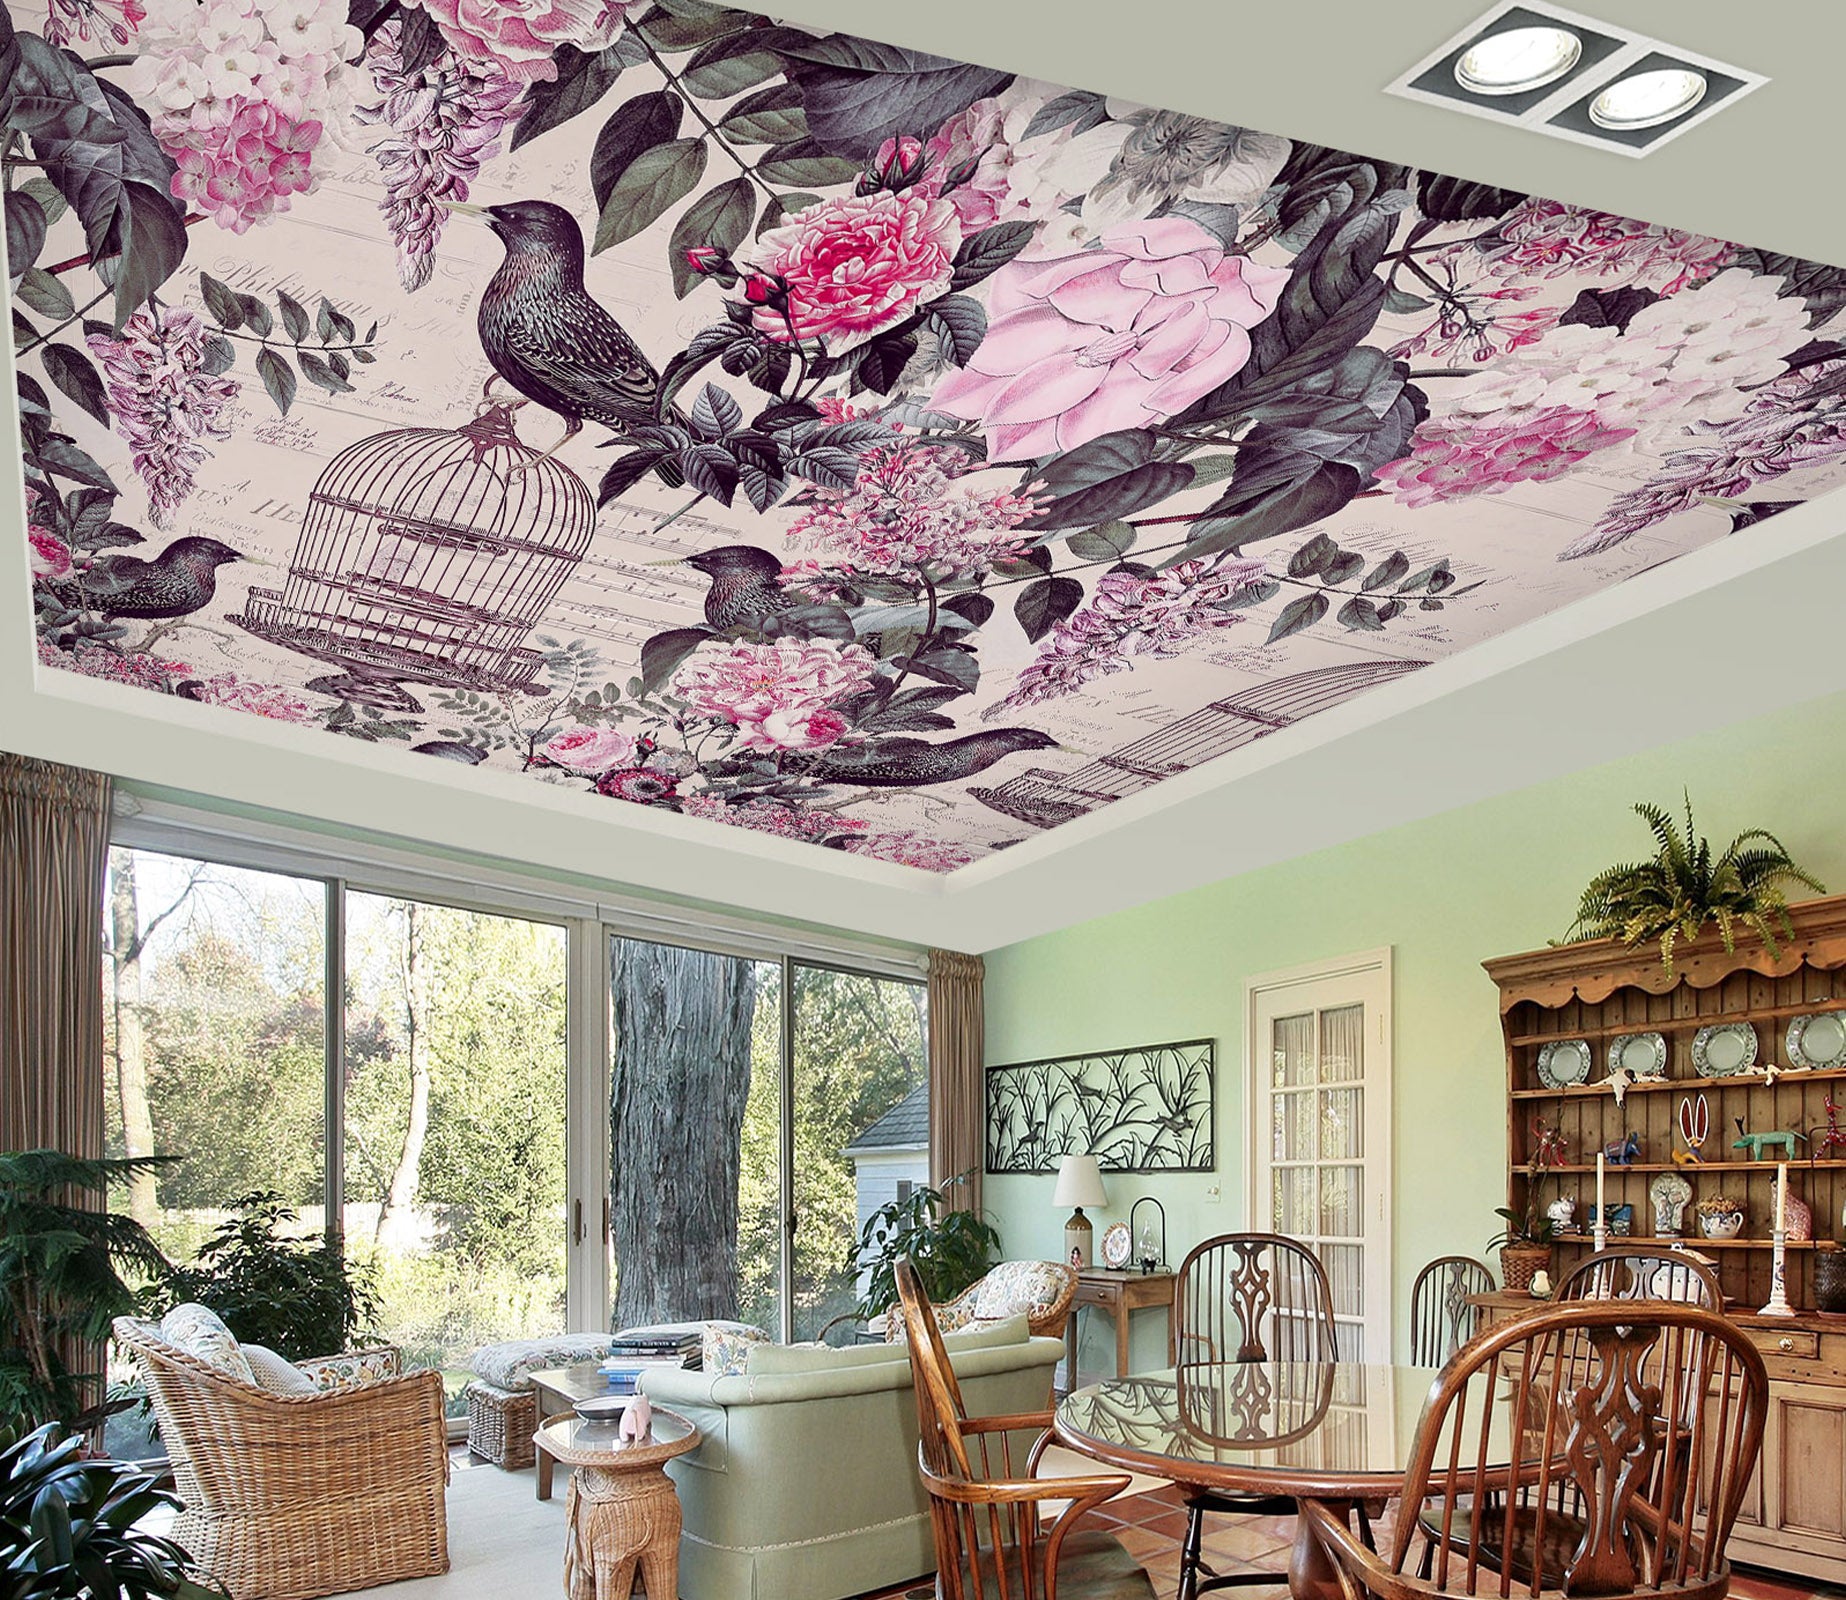 3D Birdcage Leaves 964 Andrea Haase Ceiling Wallpaper Murals